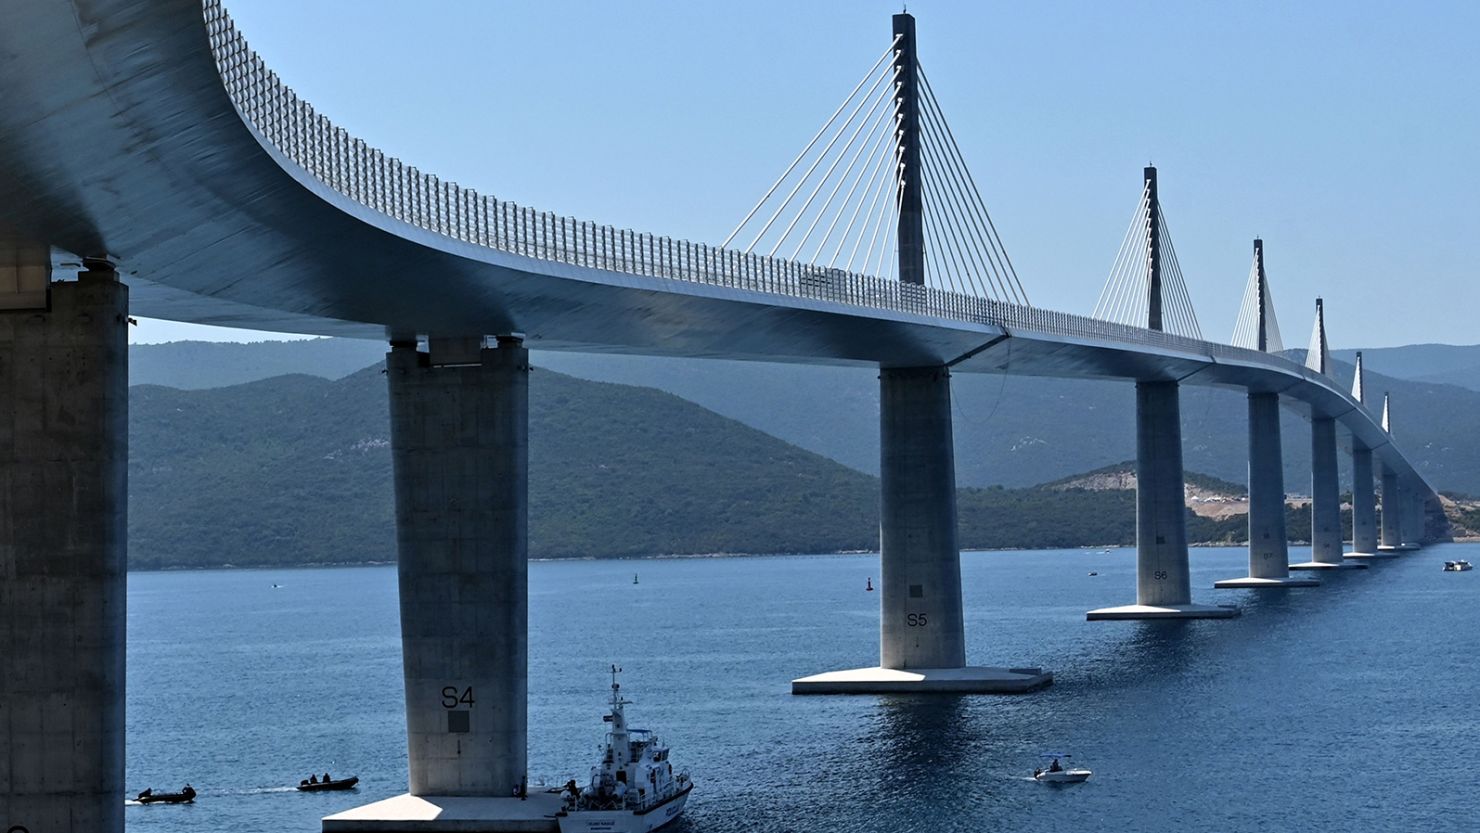 The bridge links Peljesac peninsula with the Croatian mainland.